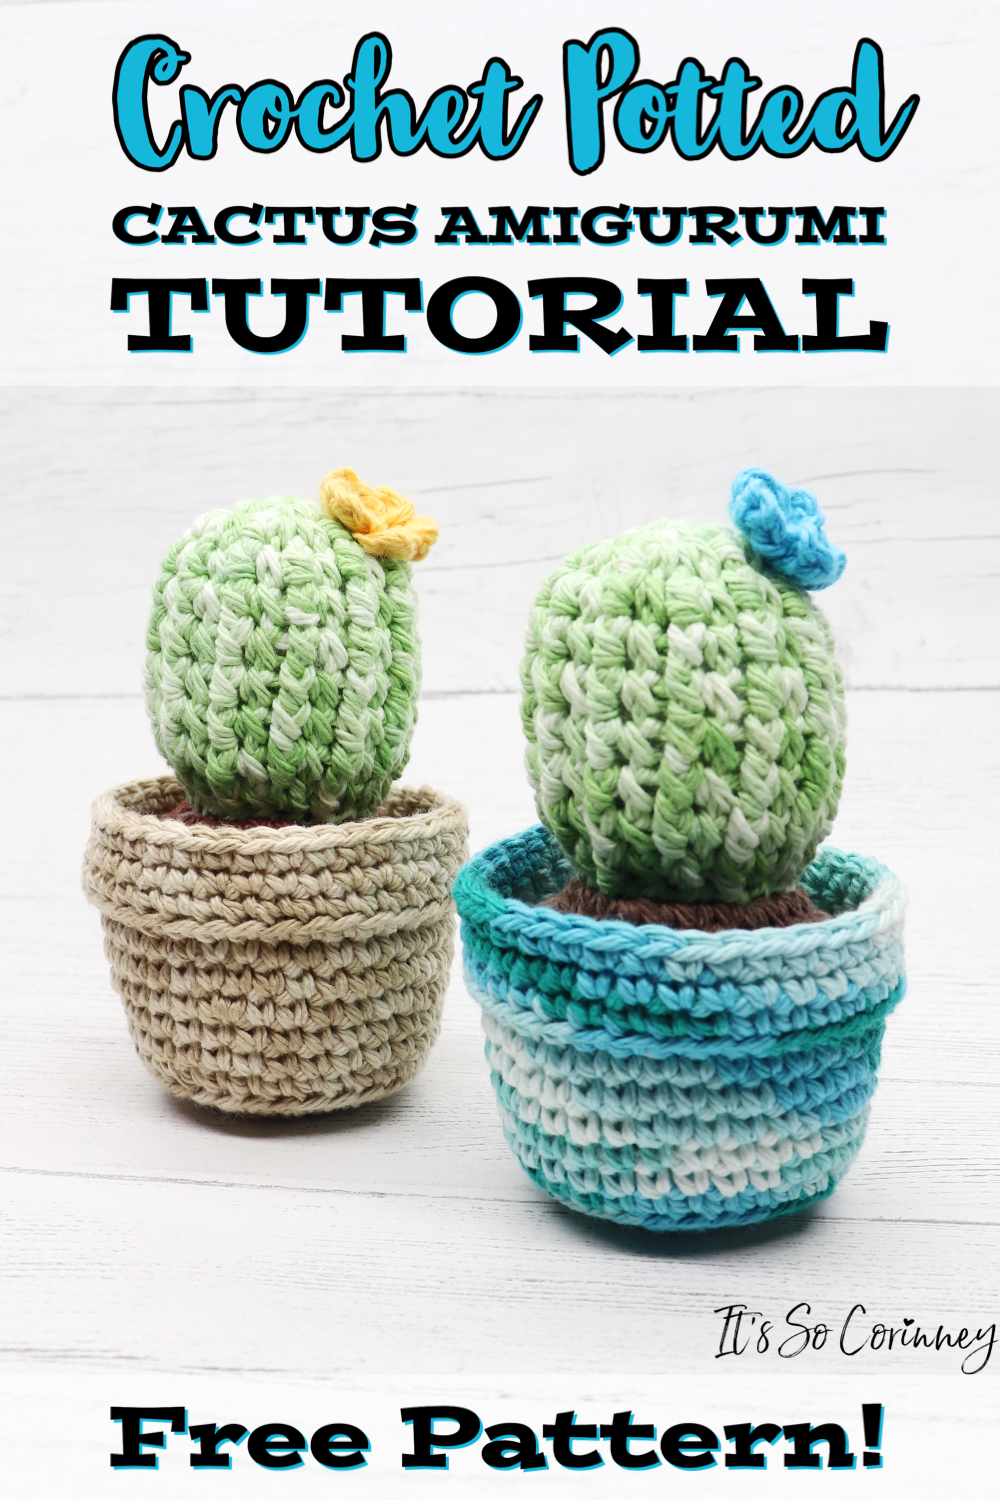 Crochet Potted Cactus Amigurumi Tutorial